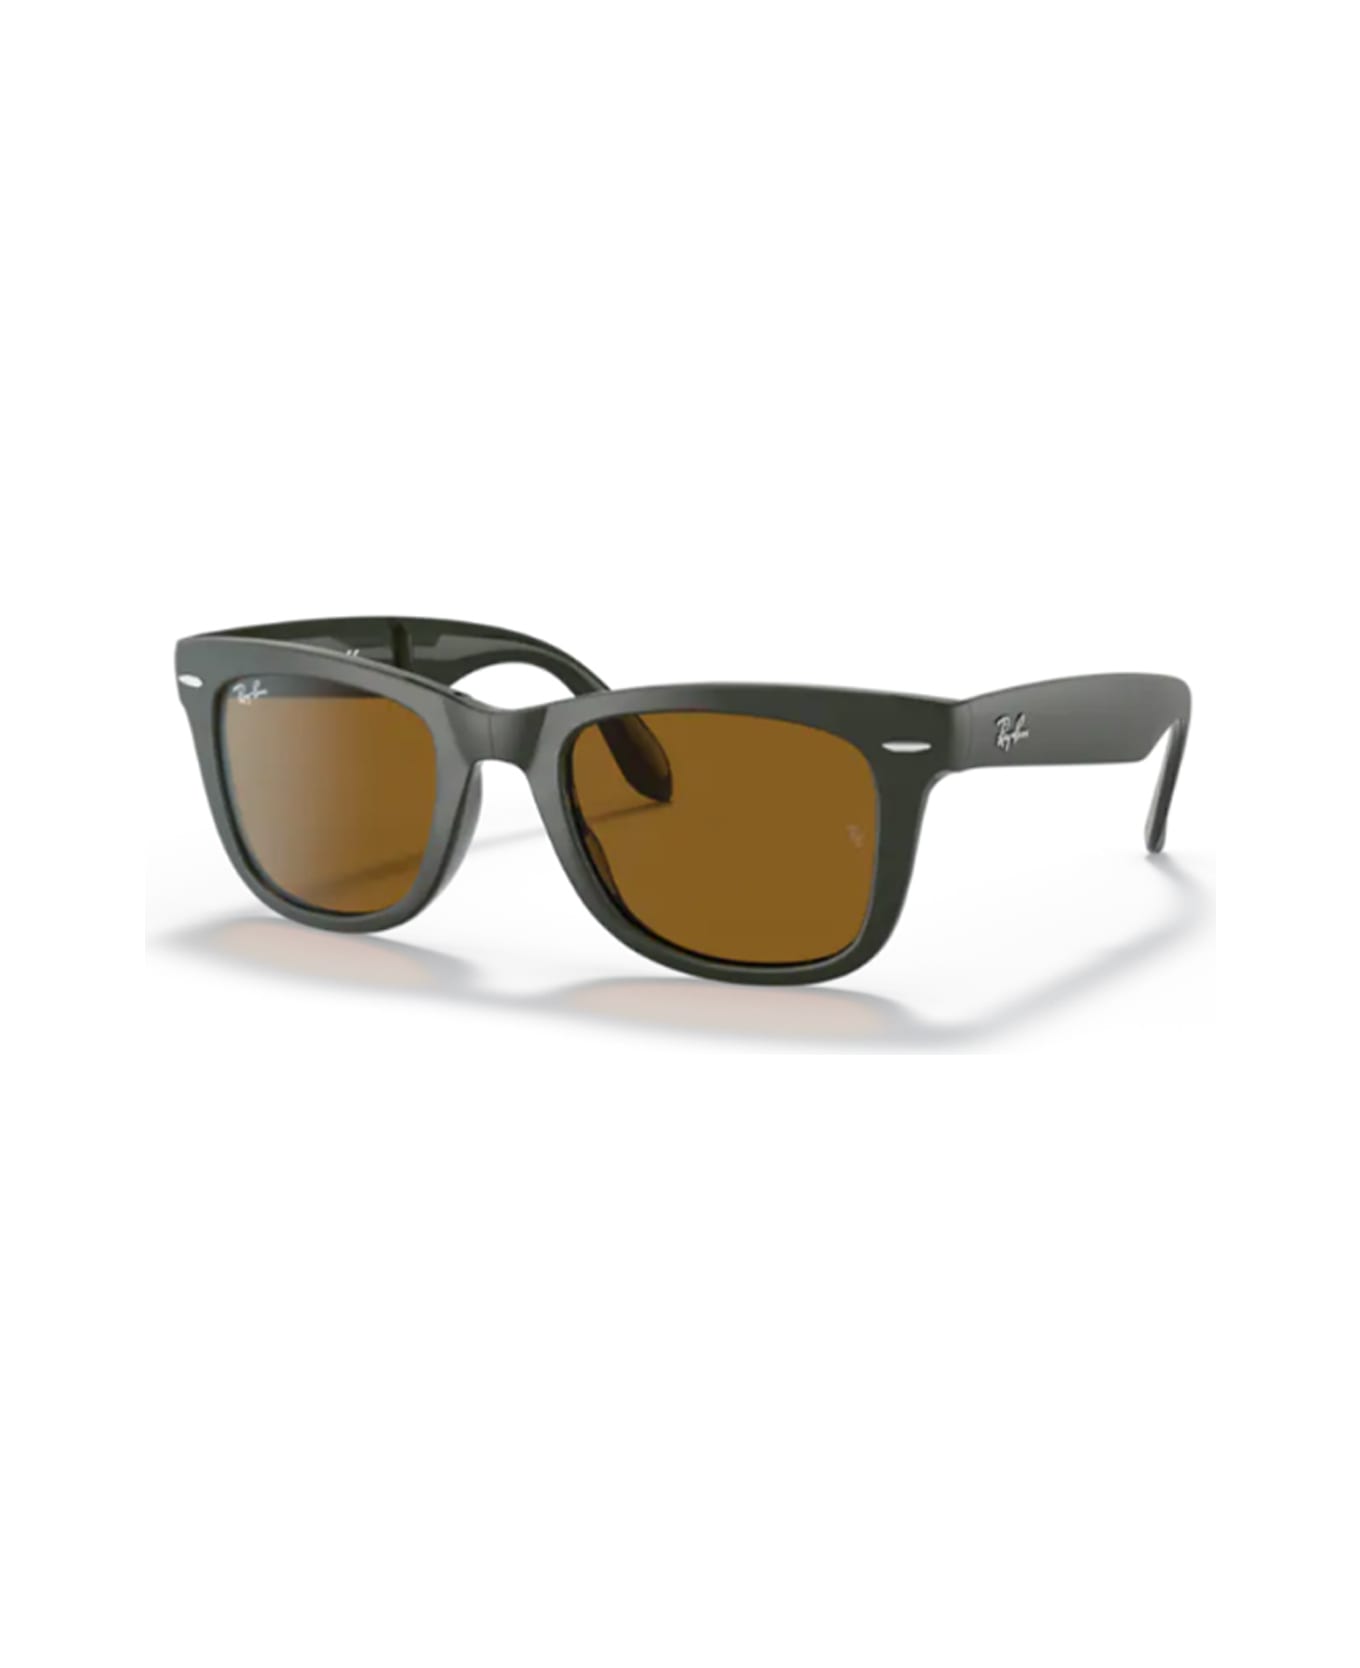 Ray-Ban Folding Wayfarer Rb4105 Sunglasses - Verde